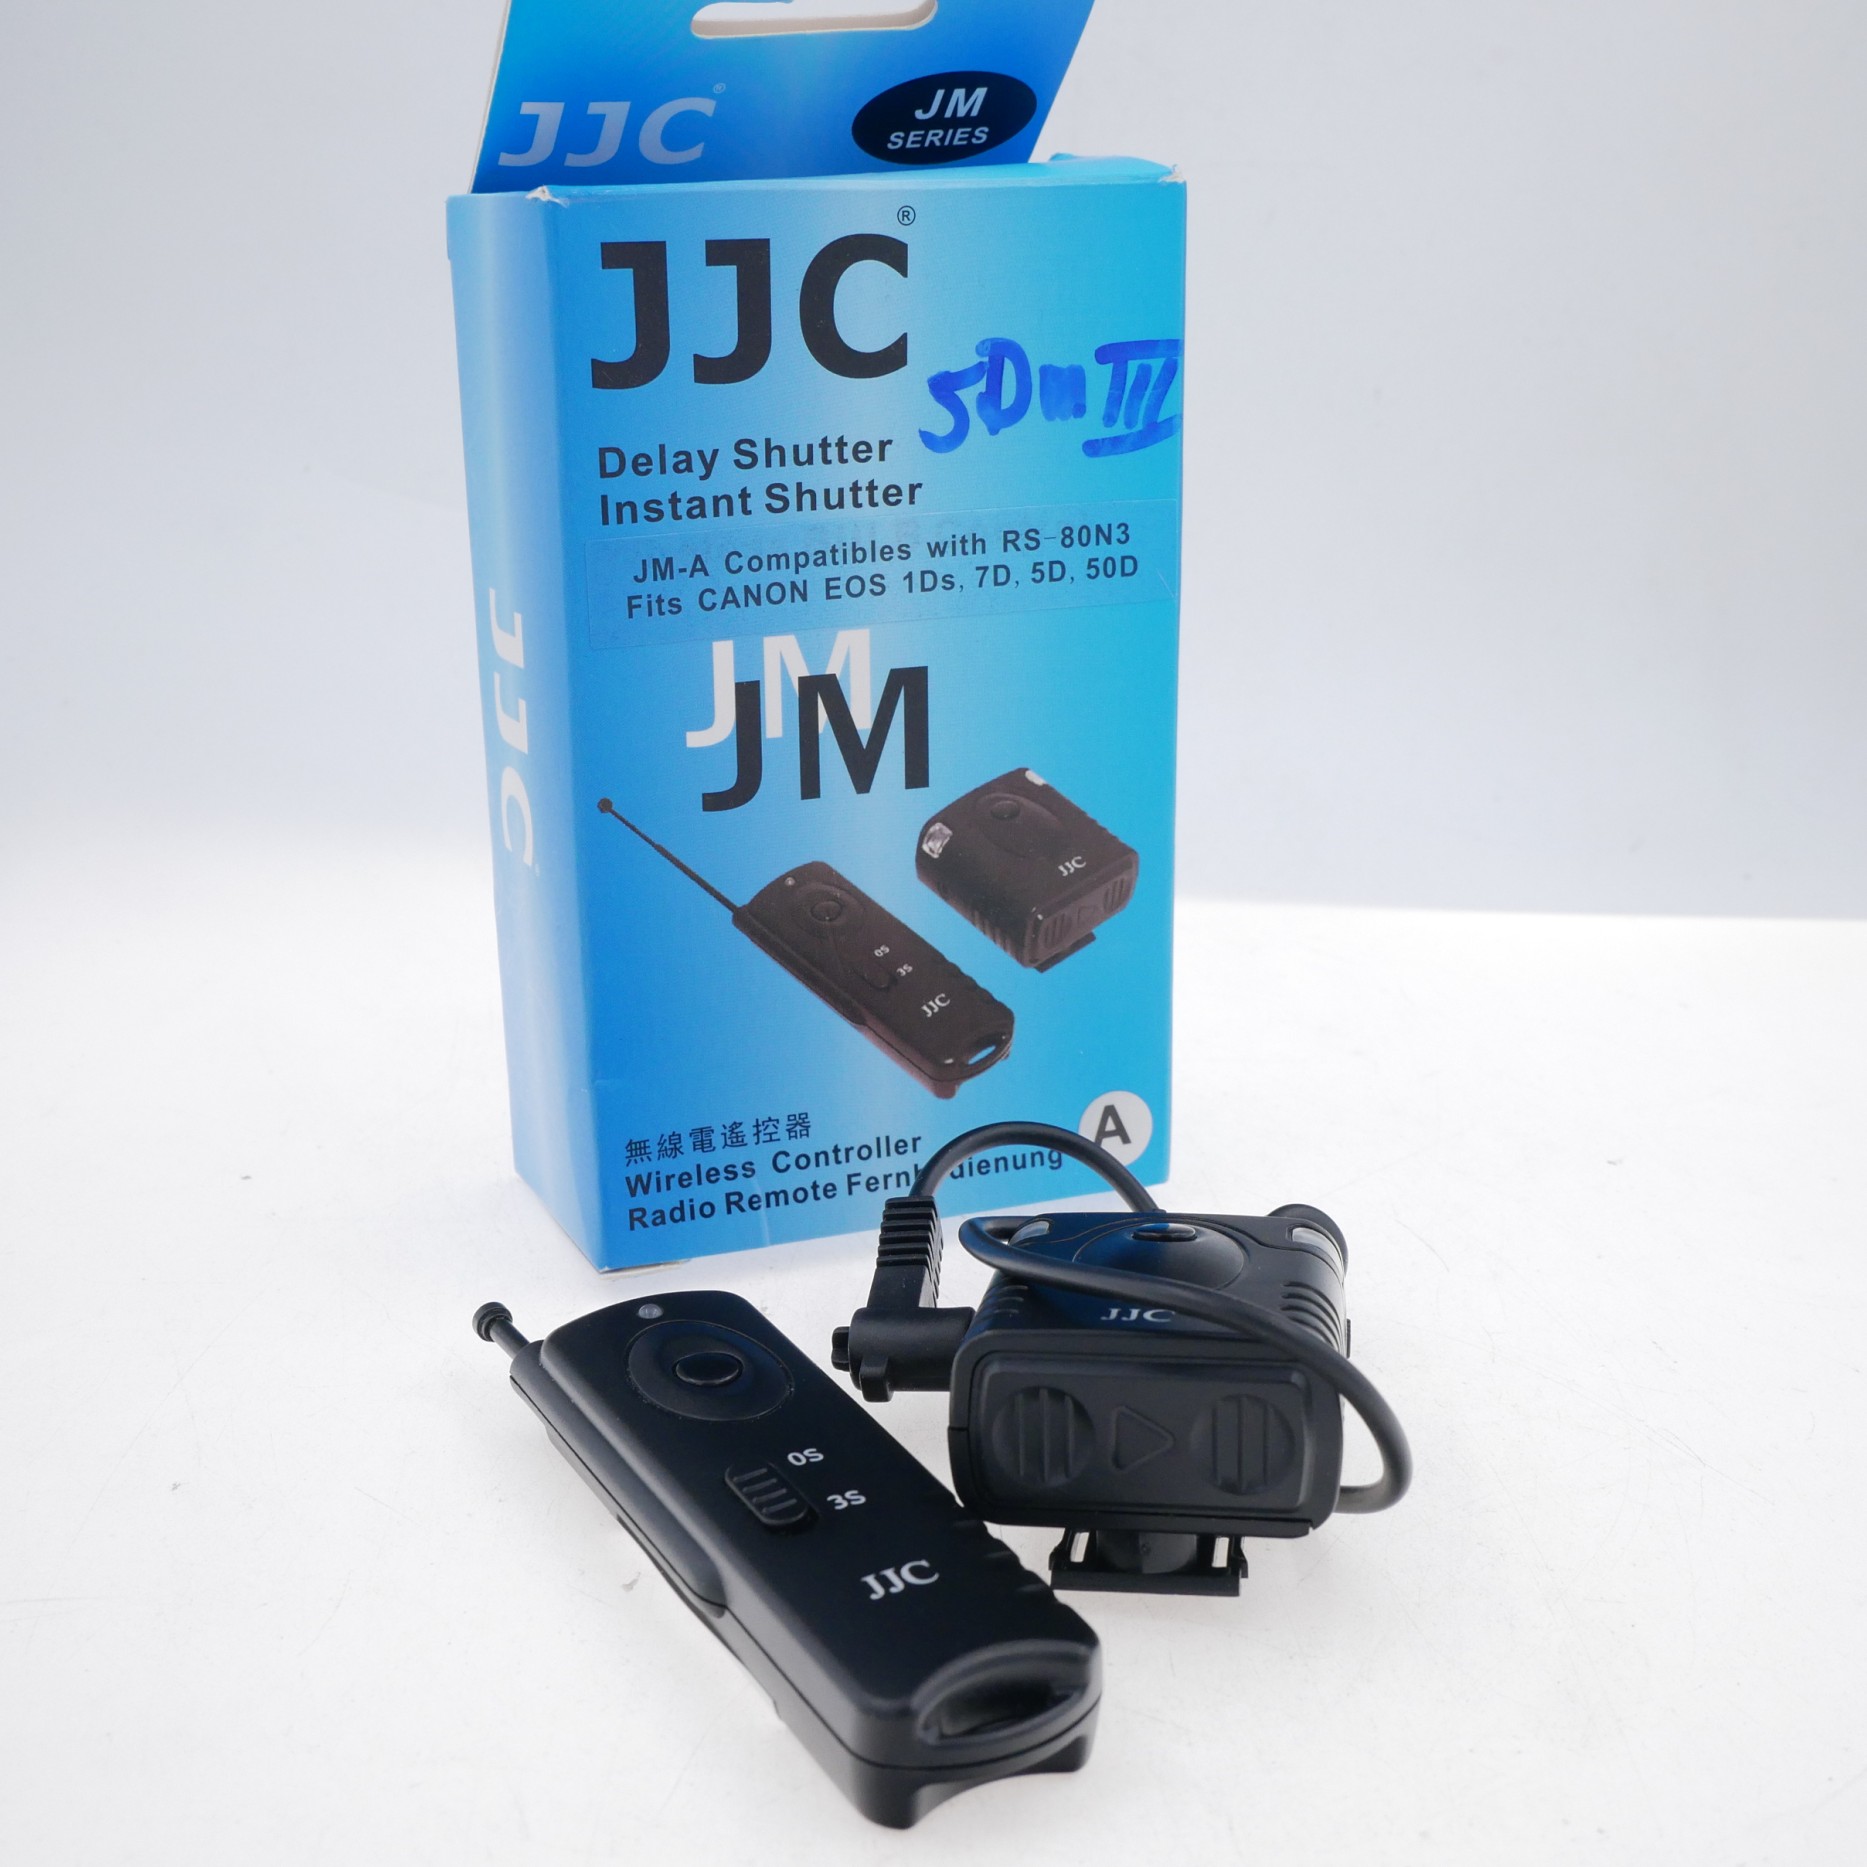 JJC Delay Shutter Instant Shutter for Canon 5D Mk III, EOS 1Ds, 7D